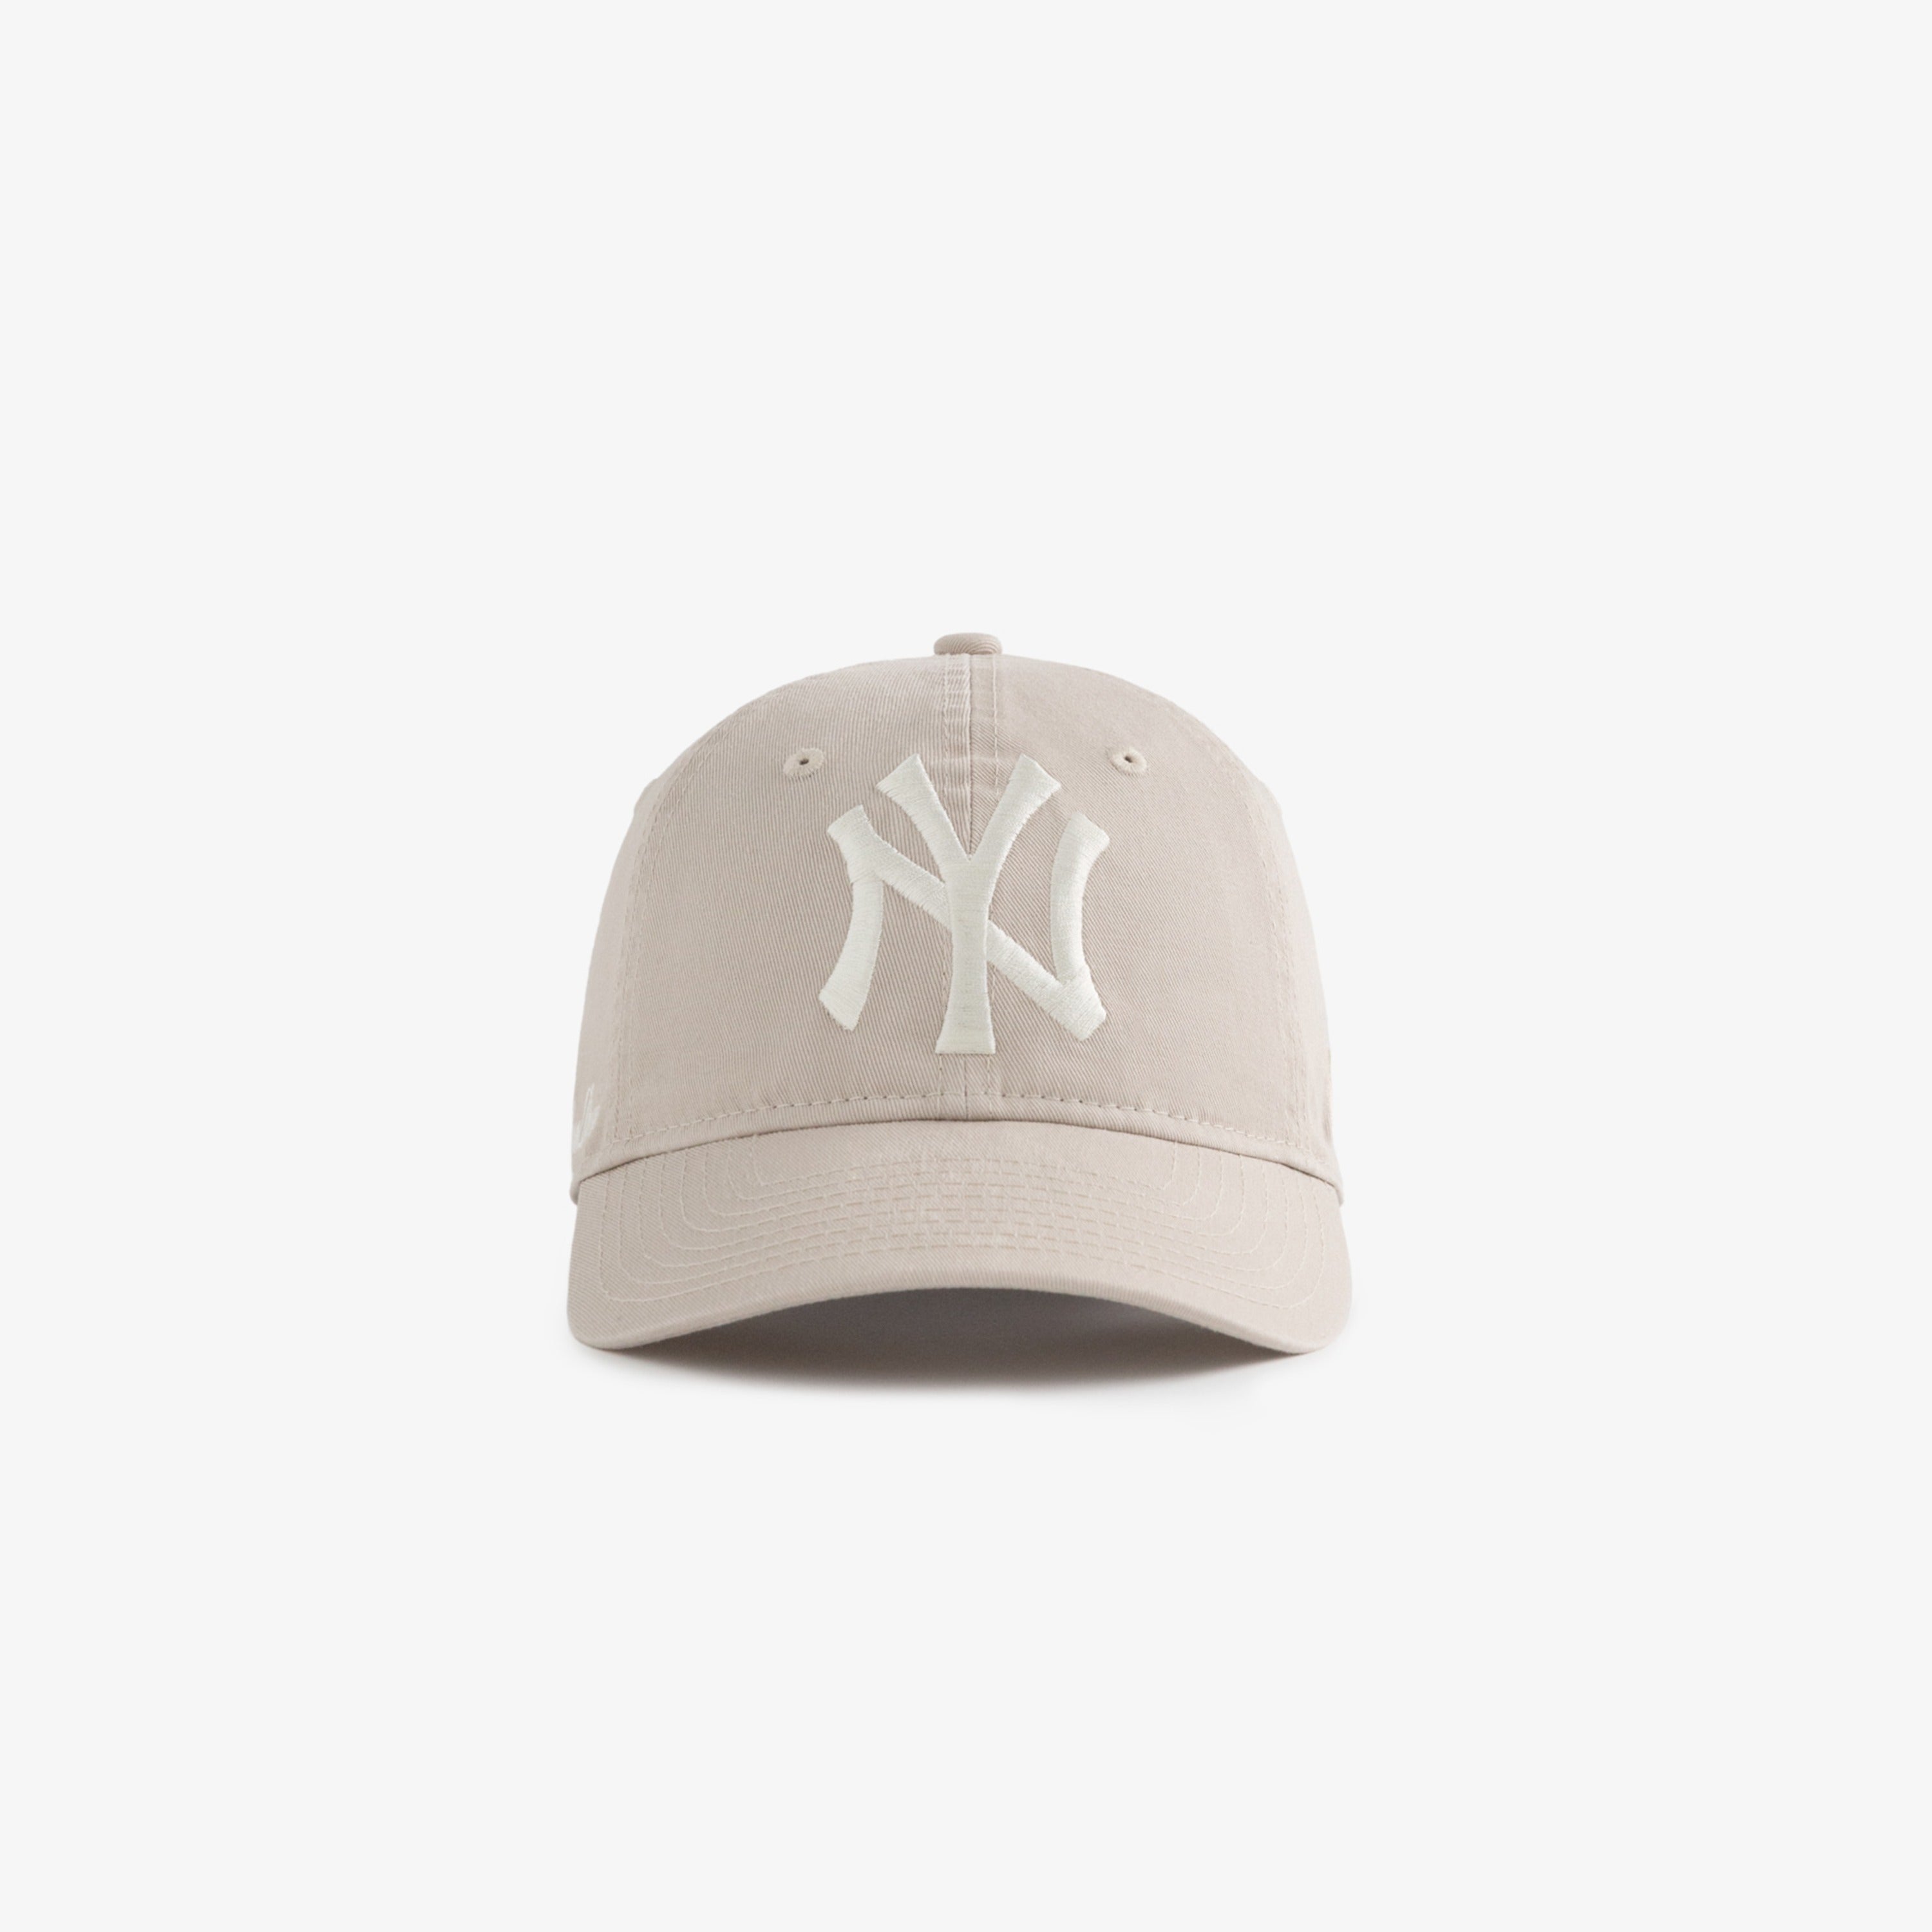 Affordable aime leon dore hat For Sale, Caps & Hats